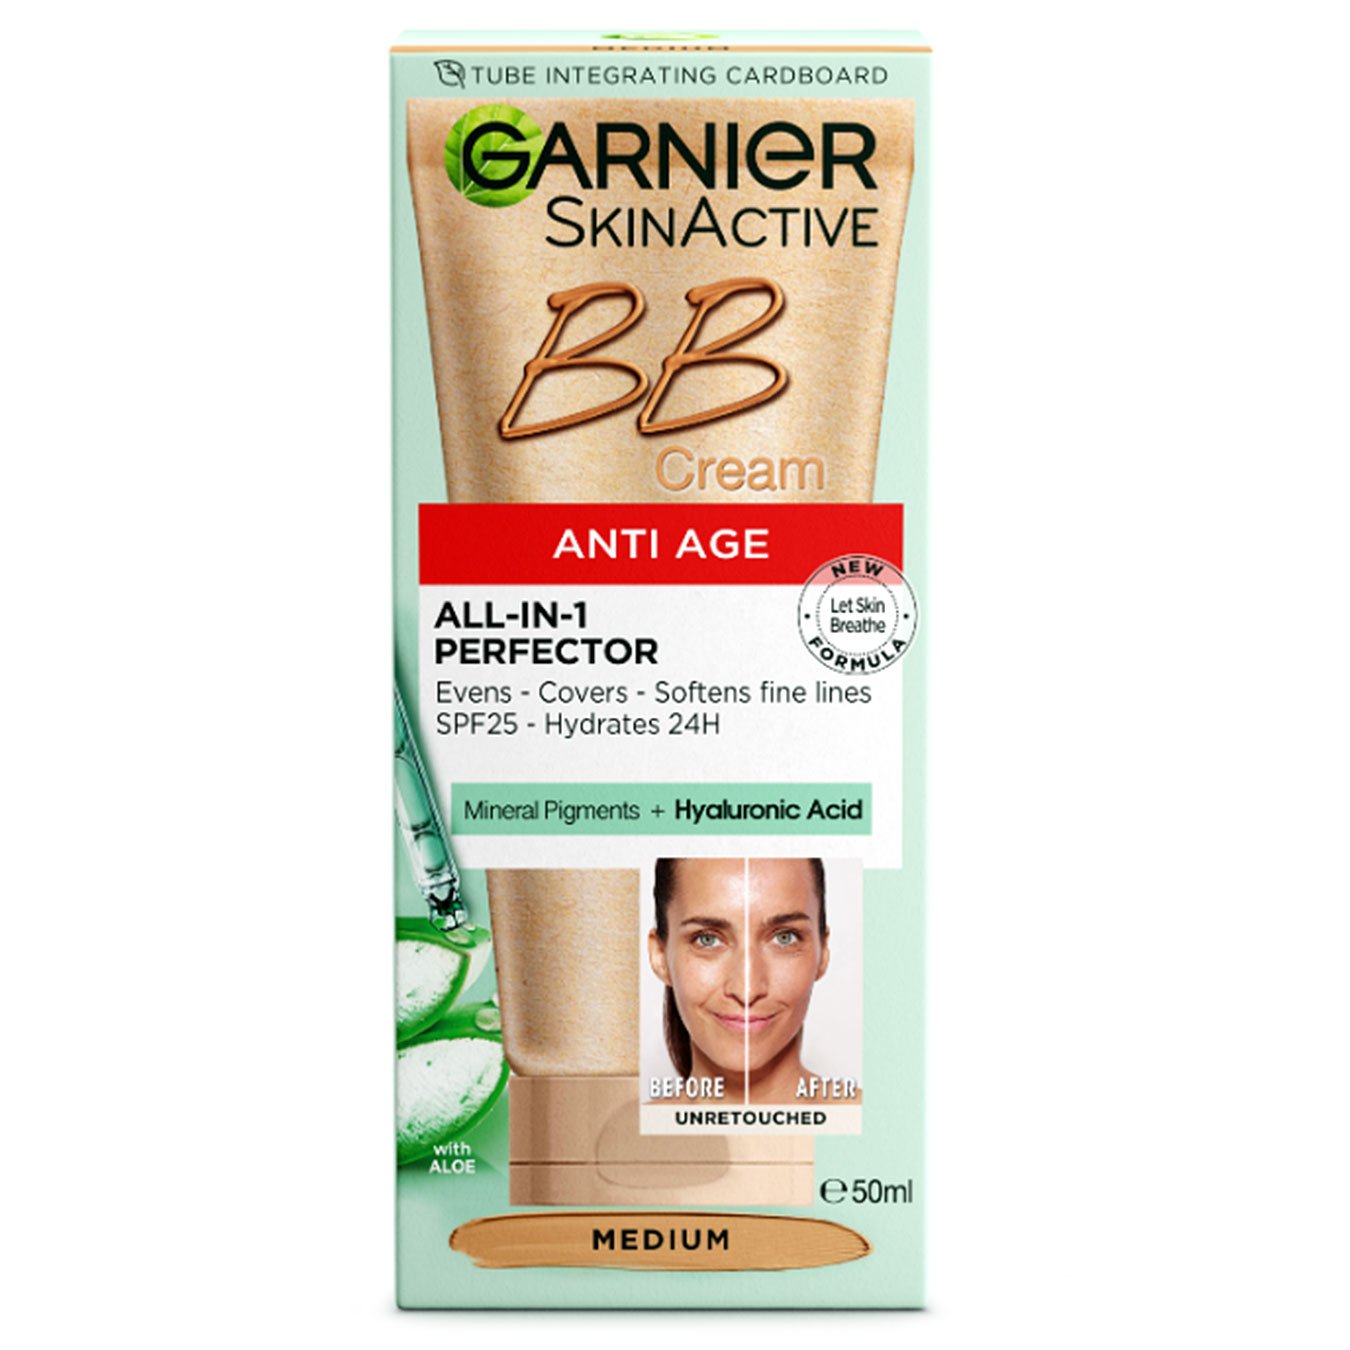 Garnier Skin Active BB Cream Anti-Age SPF 25 Medium Product